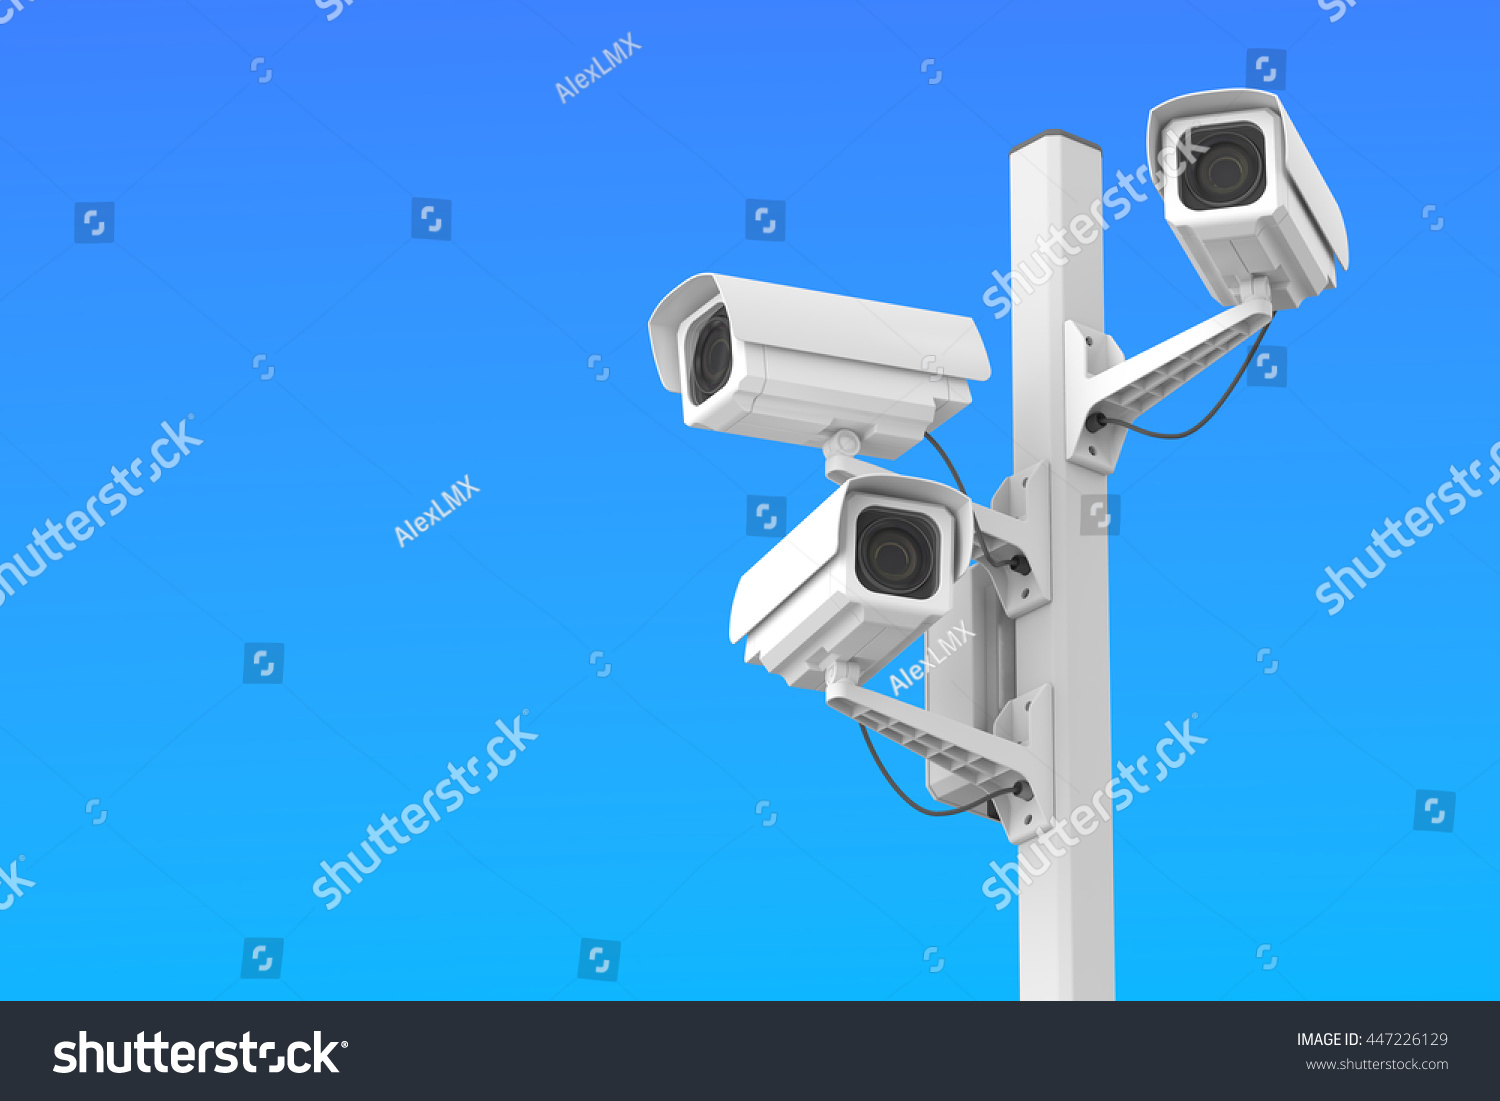 Security Cctv Cameras On Blue Sky Stock Illustration 447226129